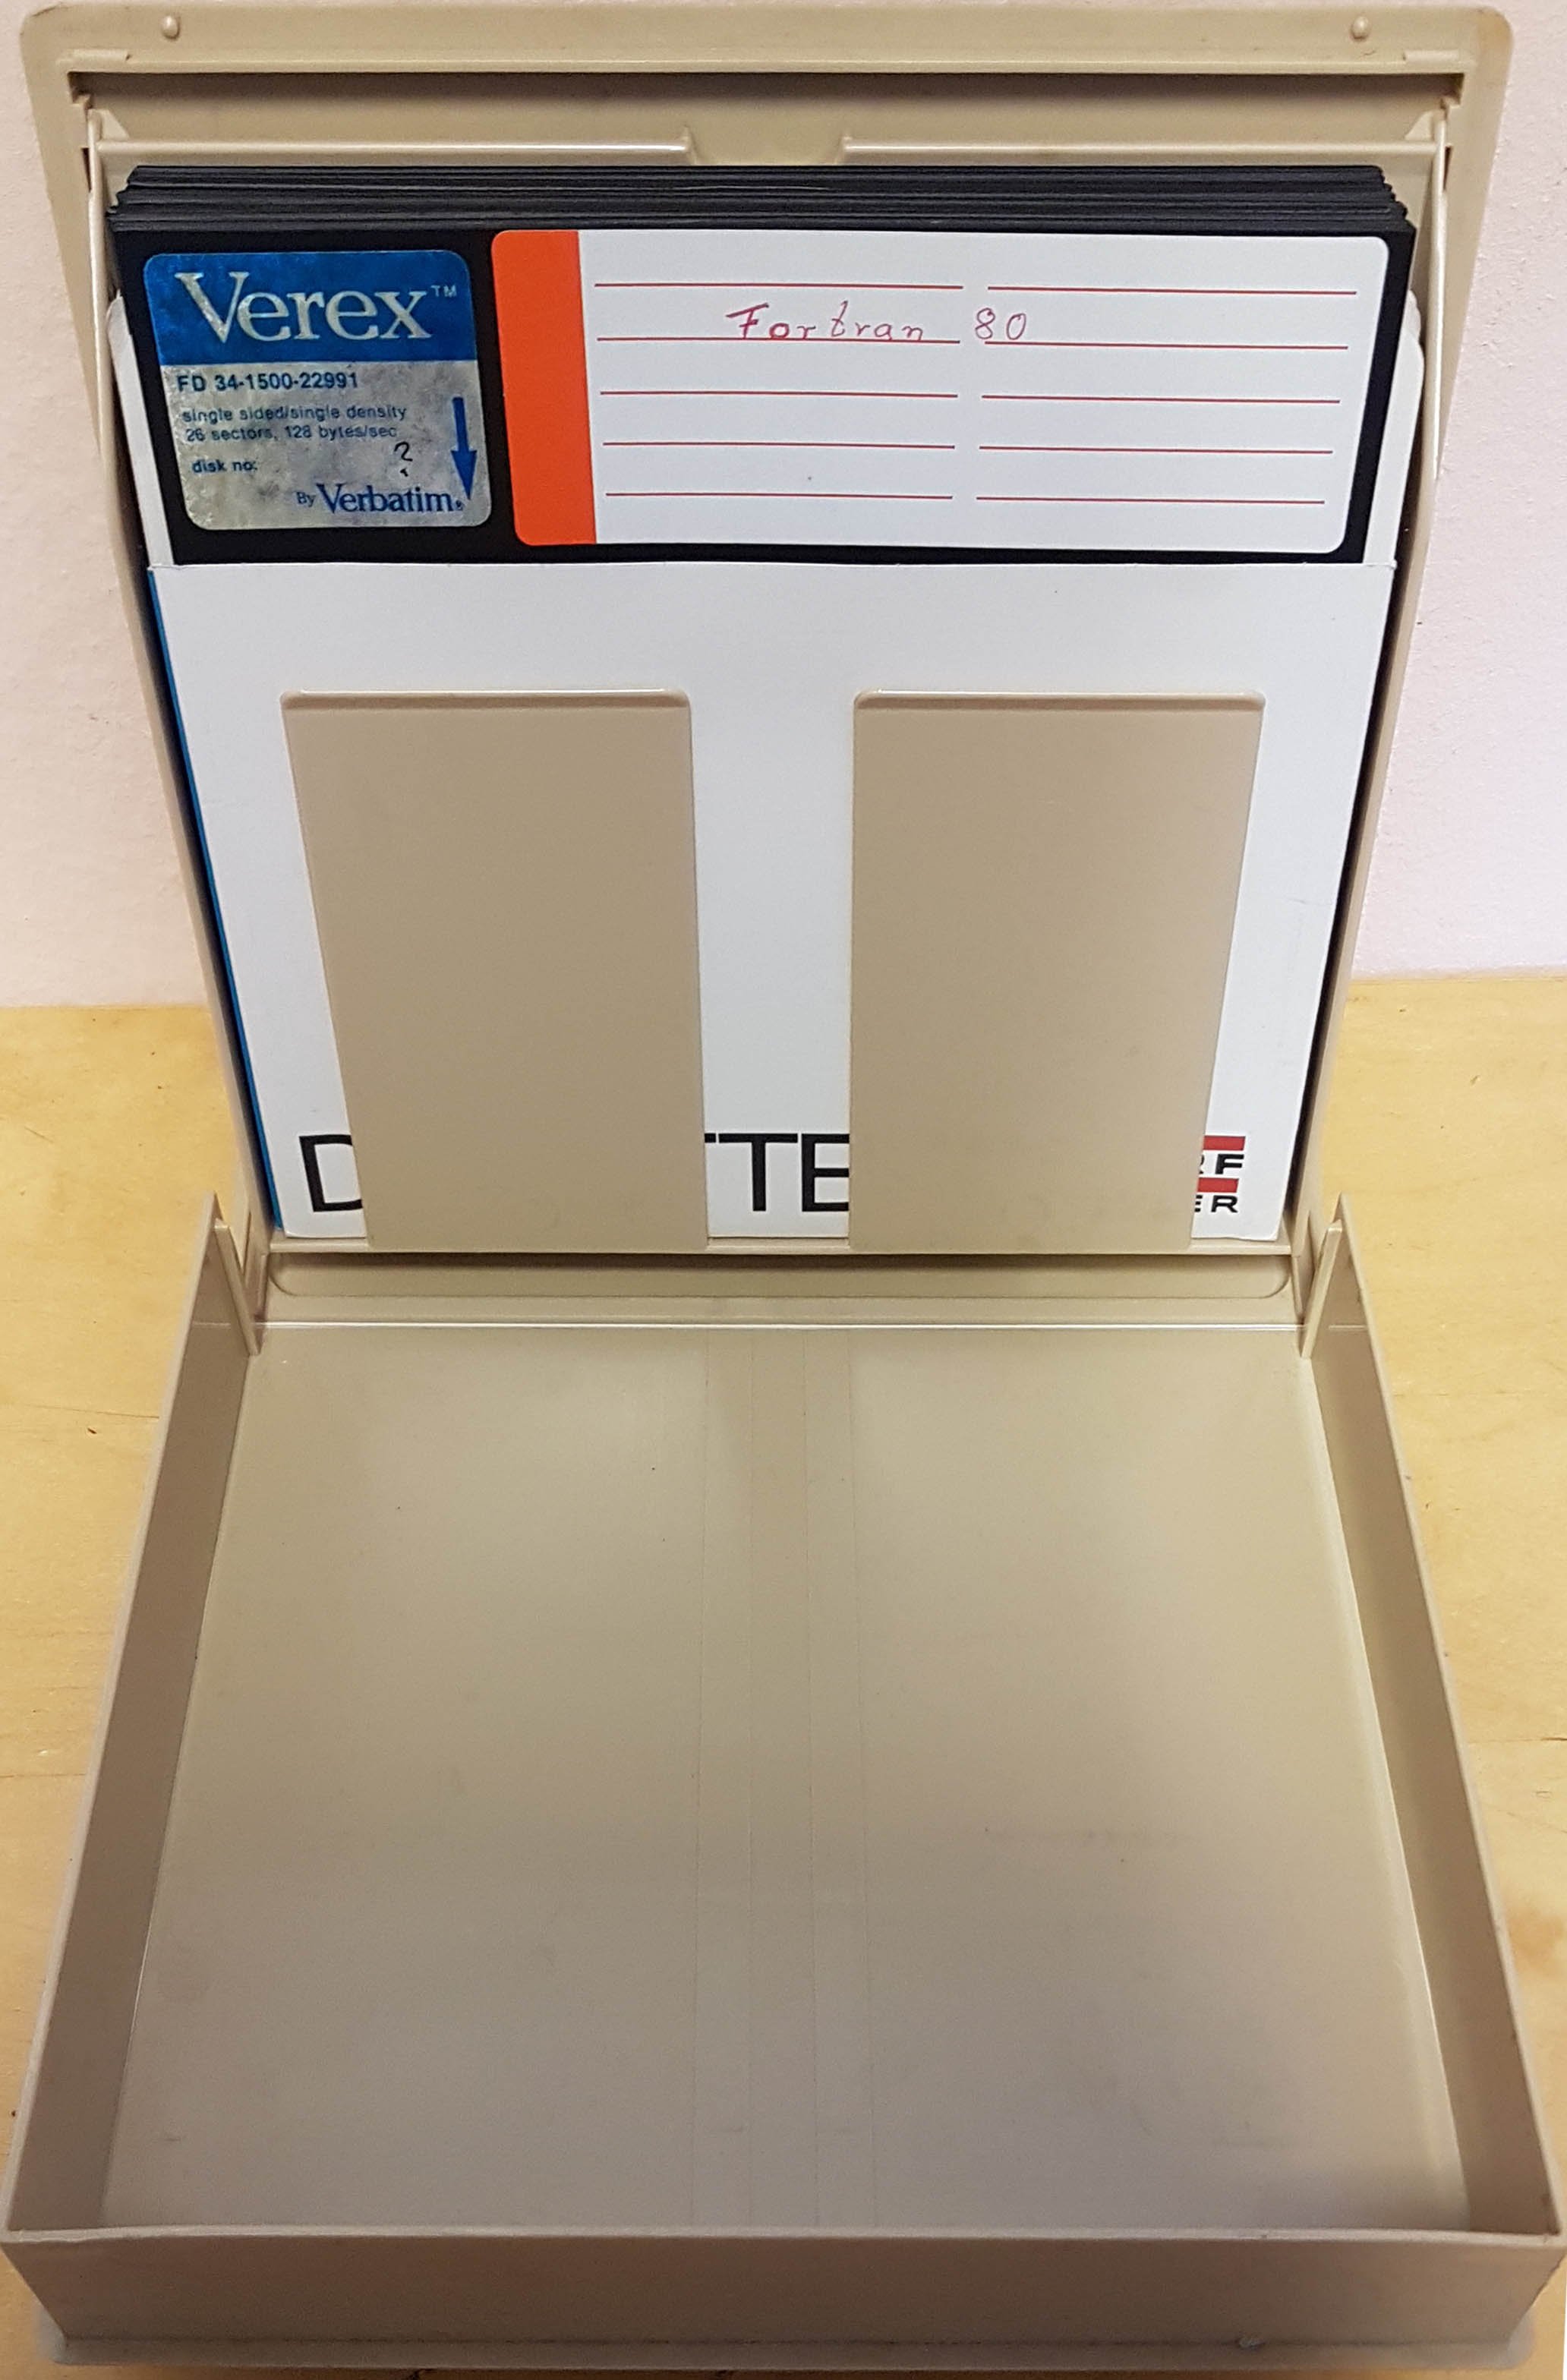 Verbatim 8 Zoll (200mm) Diskettenbox (museum comp:ex CC BY-NC-SA)